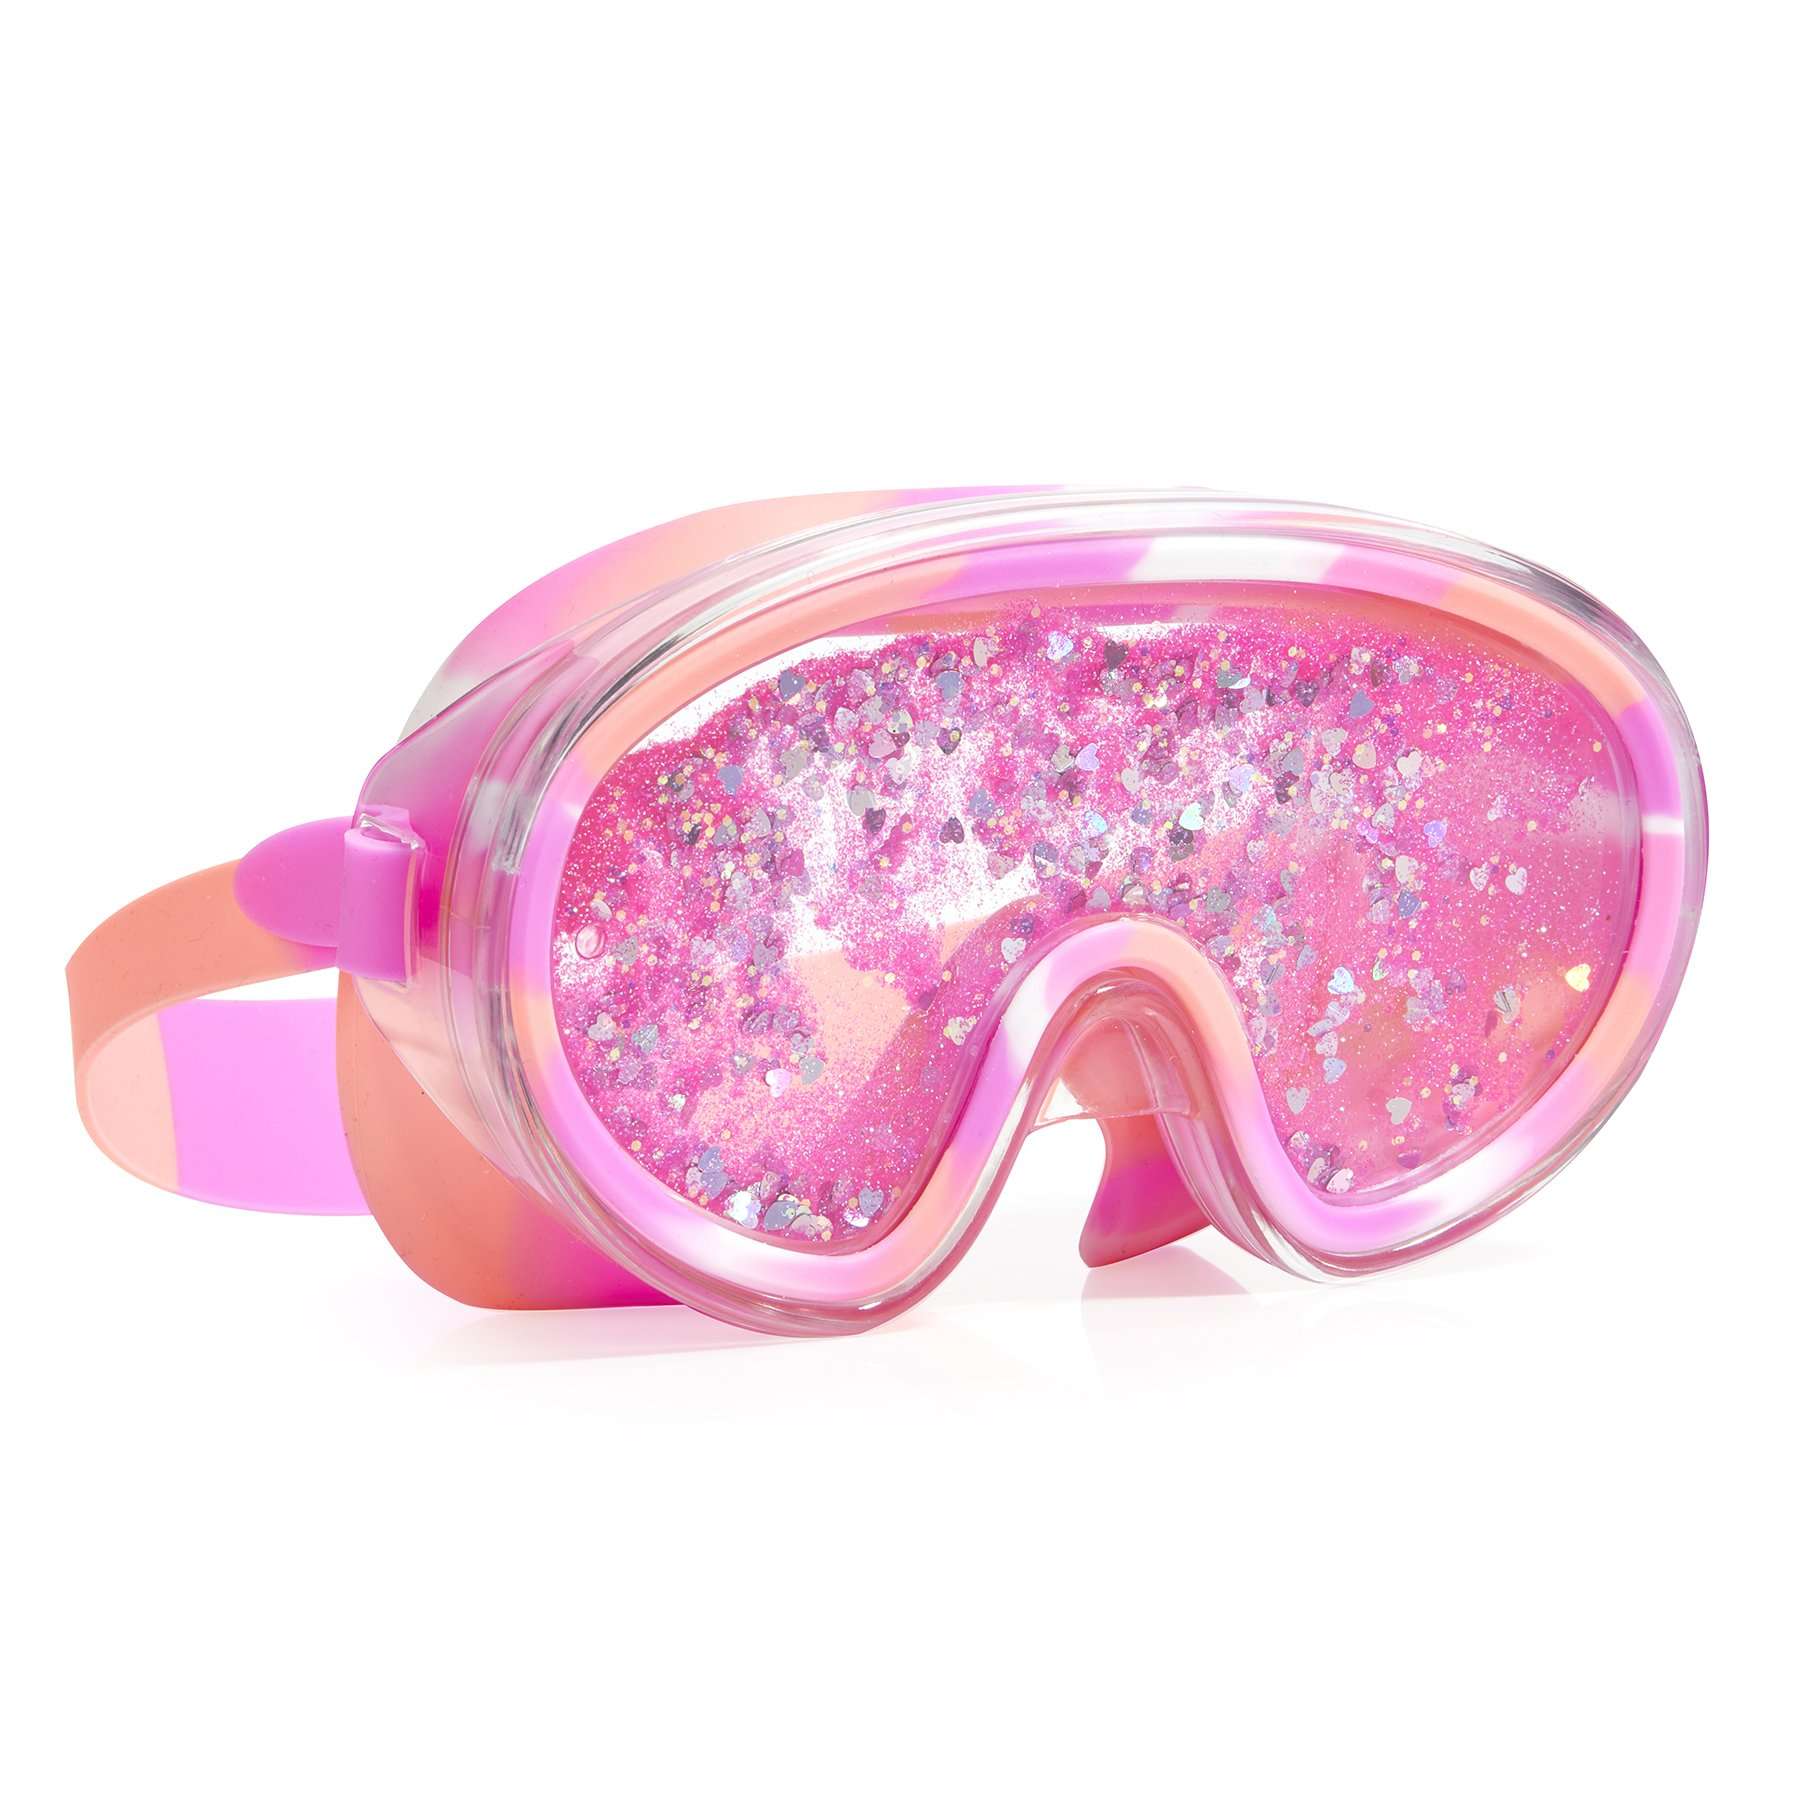 Bling2o - Swim Mask, Sand Art Pink (602933)